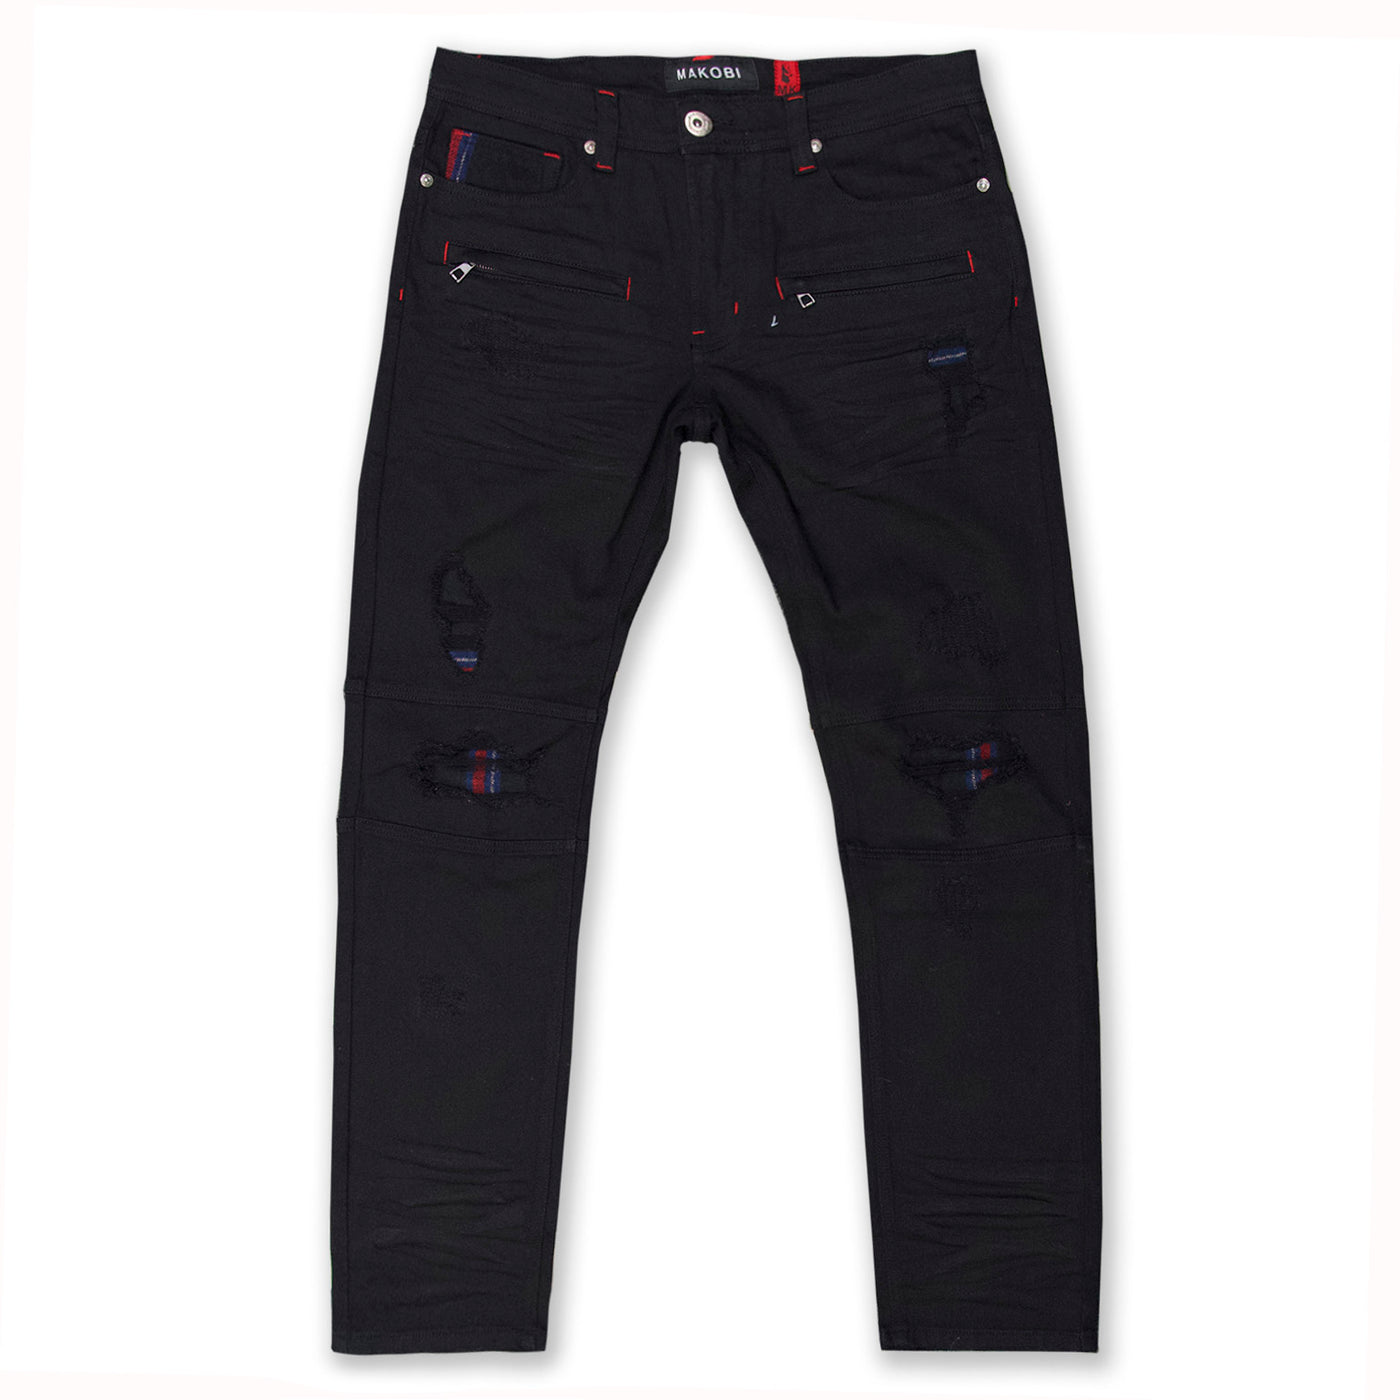 M1768 Makobi Malachy Jeans w/ Contrast Underlay - Black